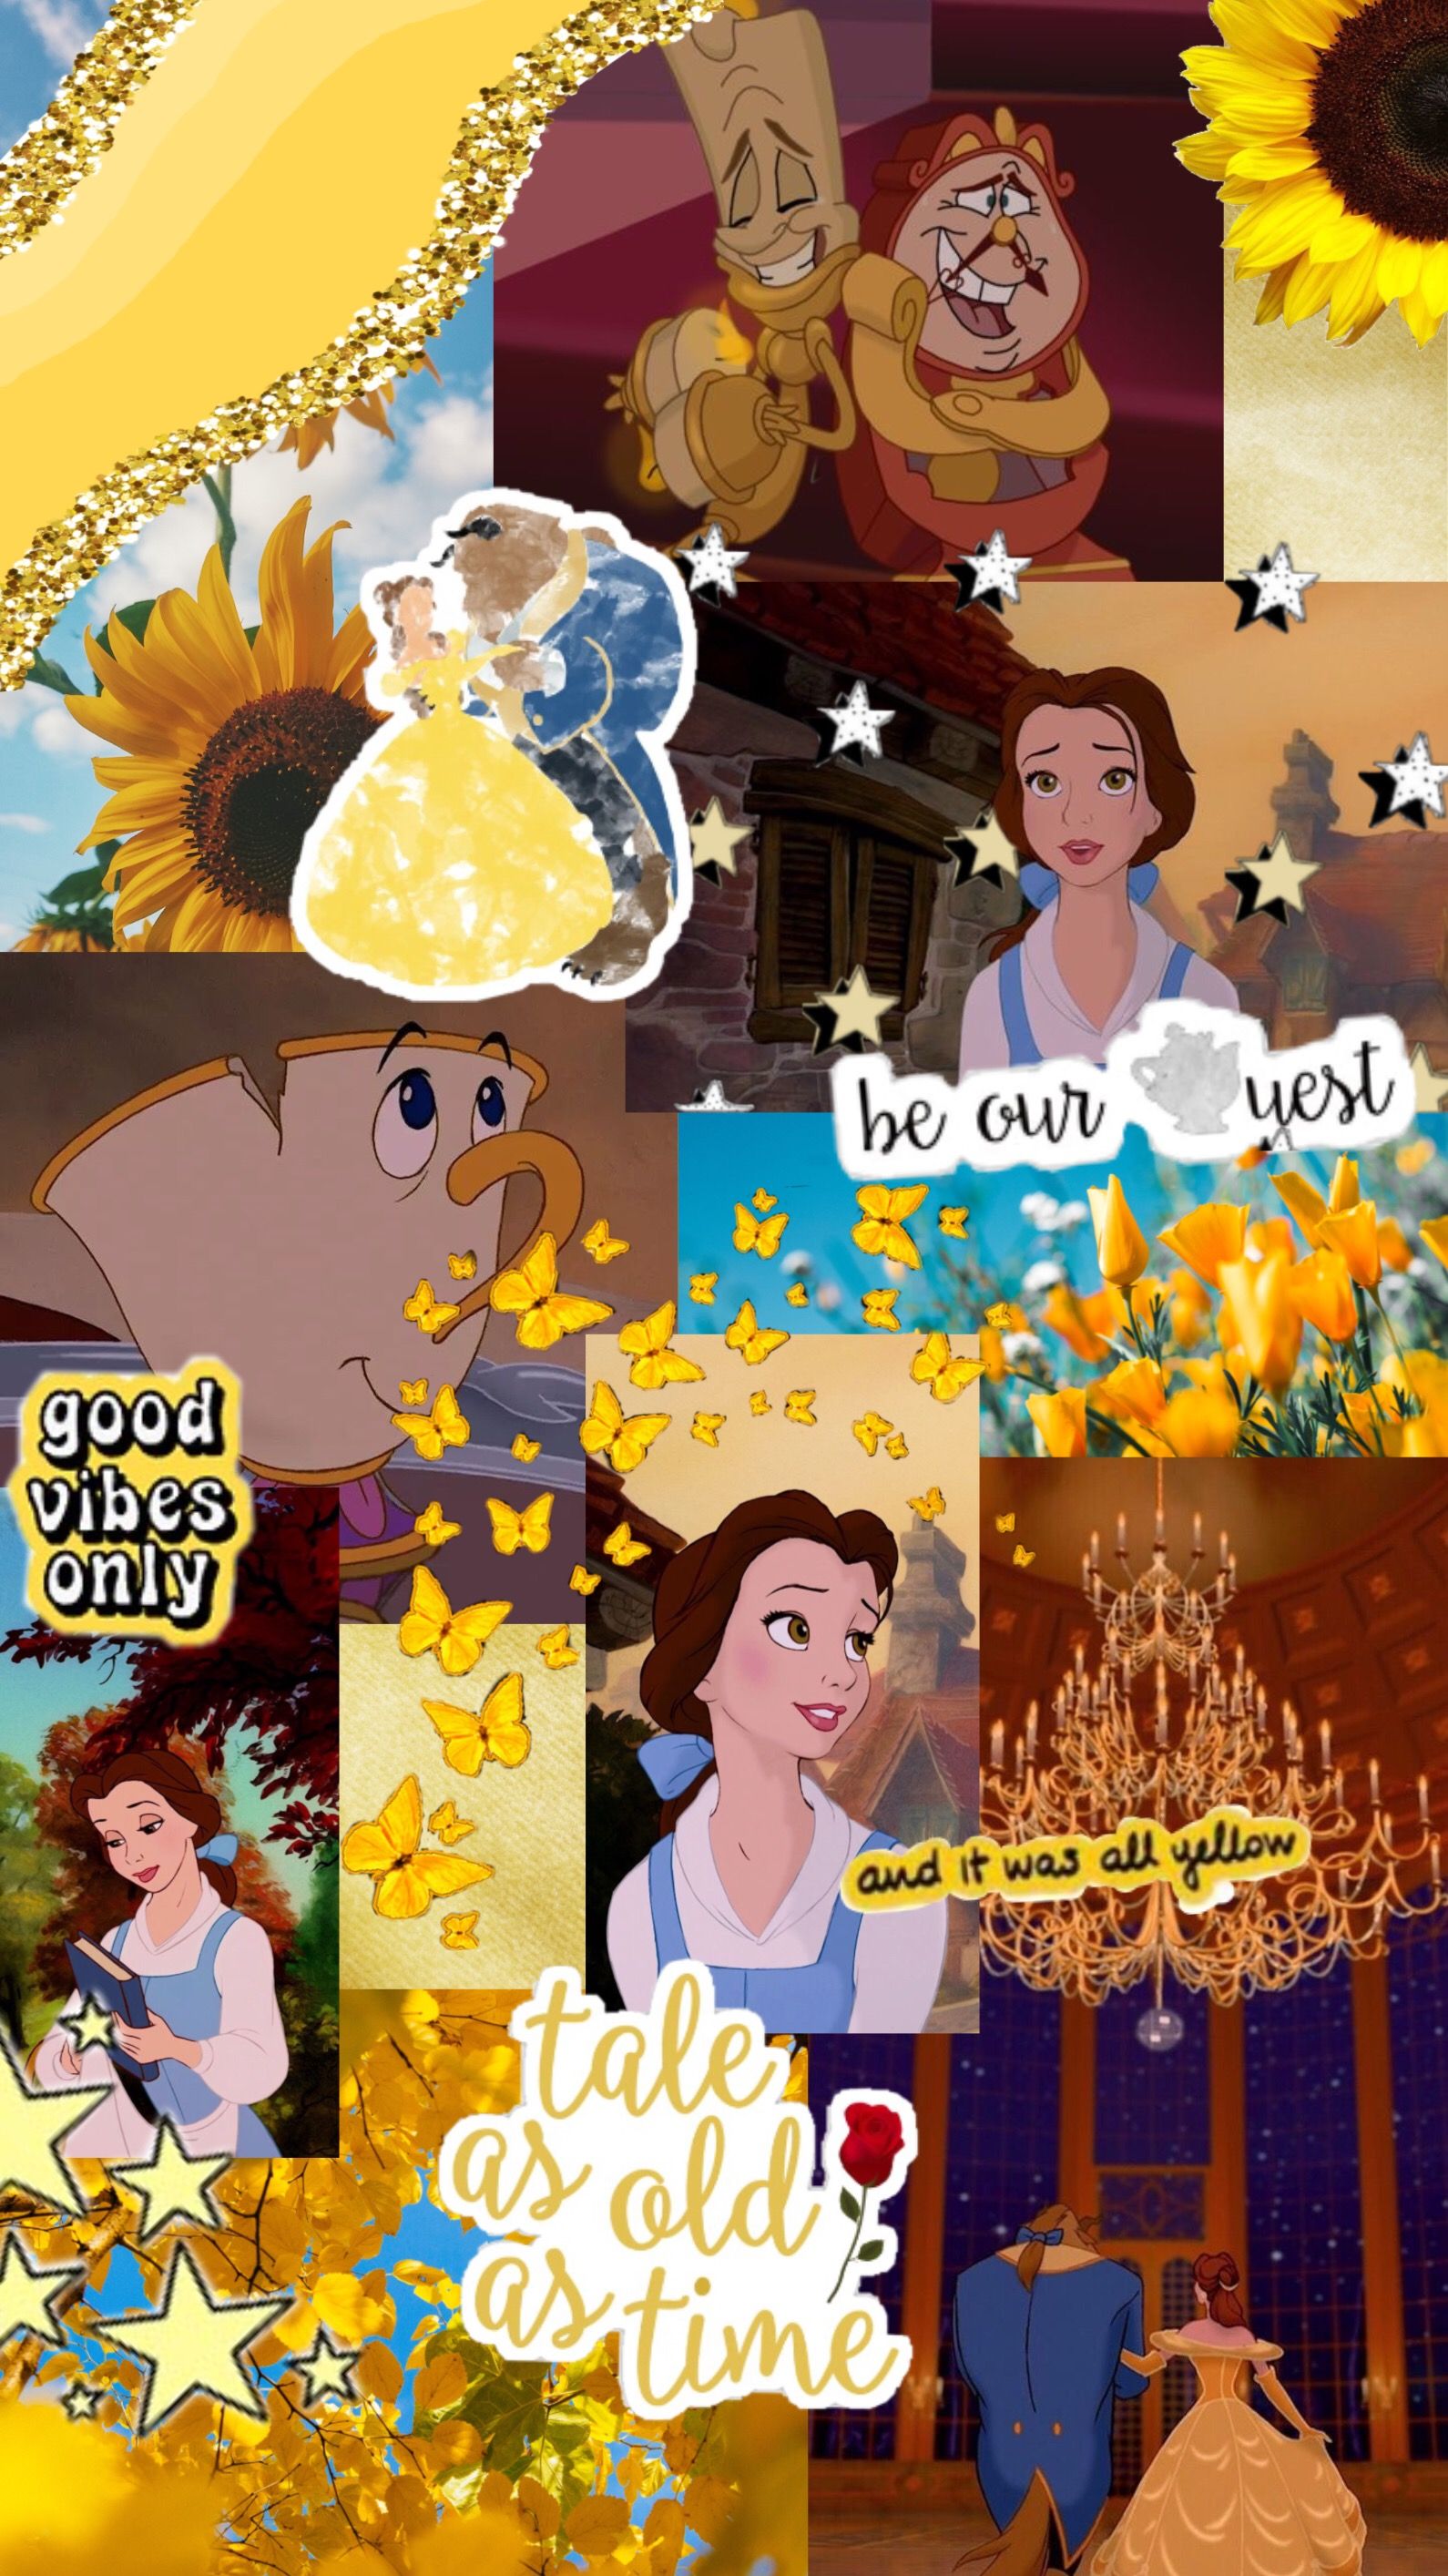 Aesthetic wallpapers ~ - Disney princesses  Cute cartoon wallpapers,  Wallpaper iphone disney, Beast wallpaper